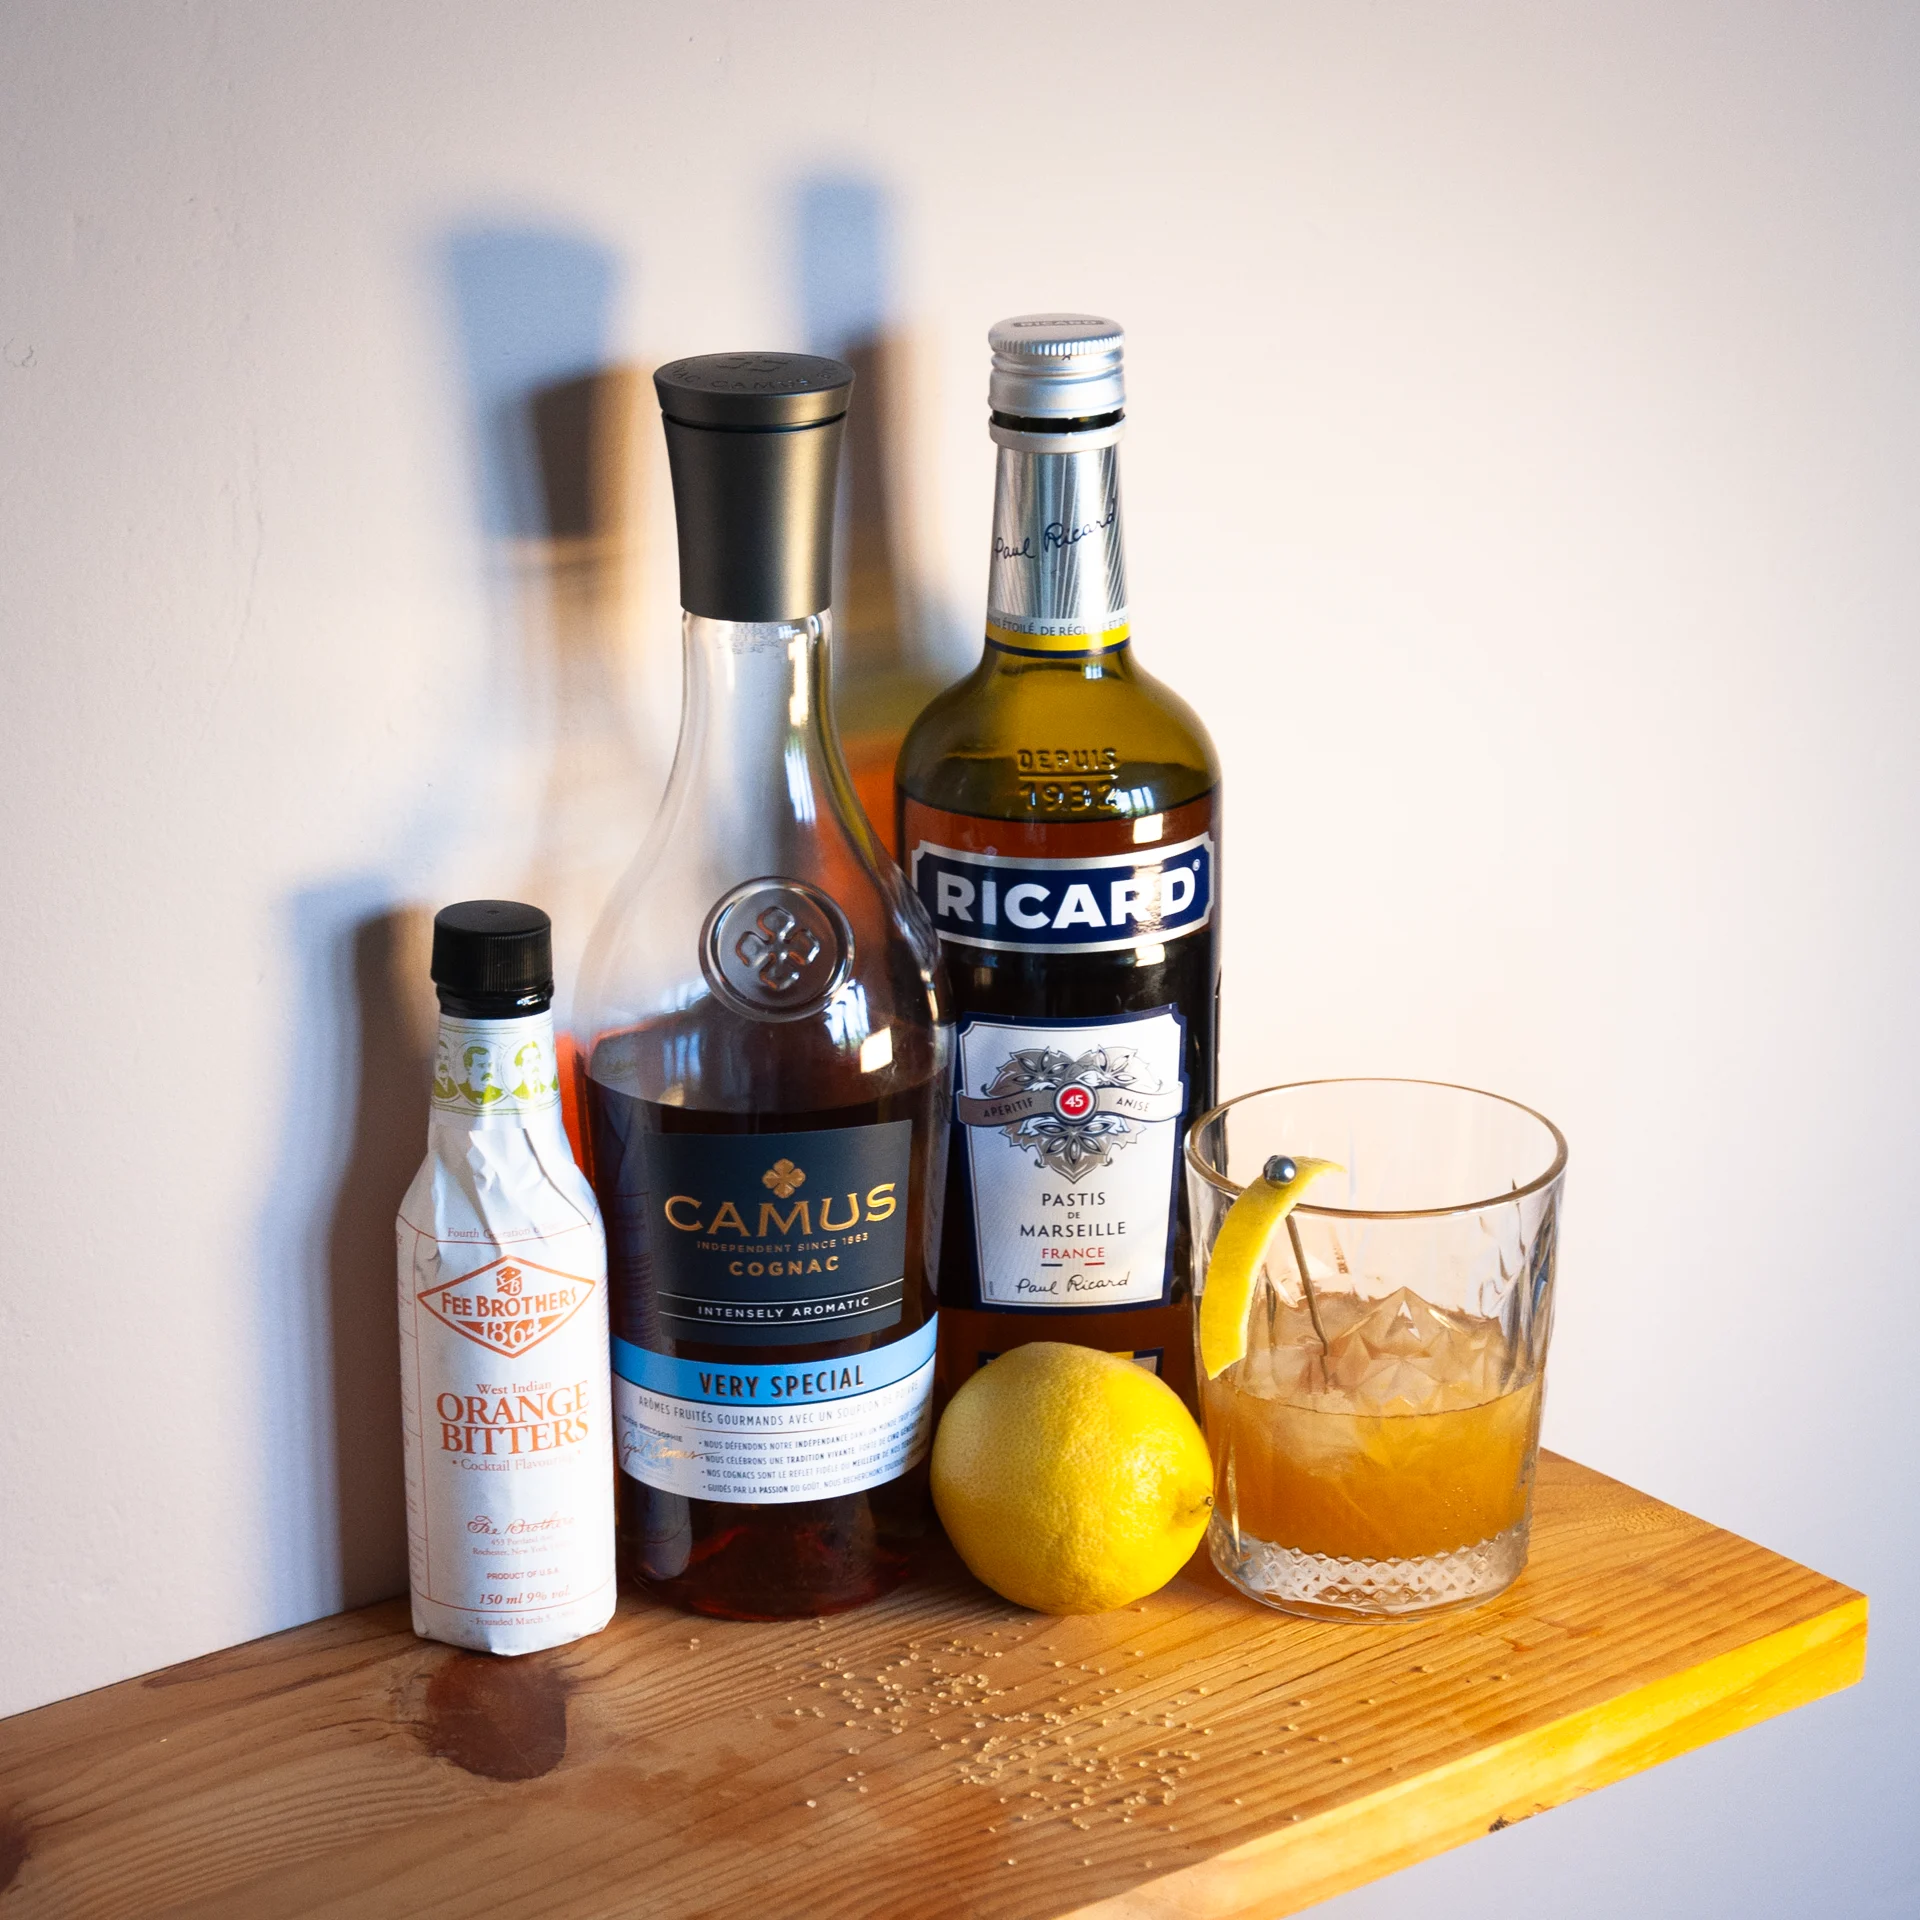 Sazerac ingredients : cognac, pastis, cane sugar, bitter and lemon zest